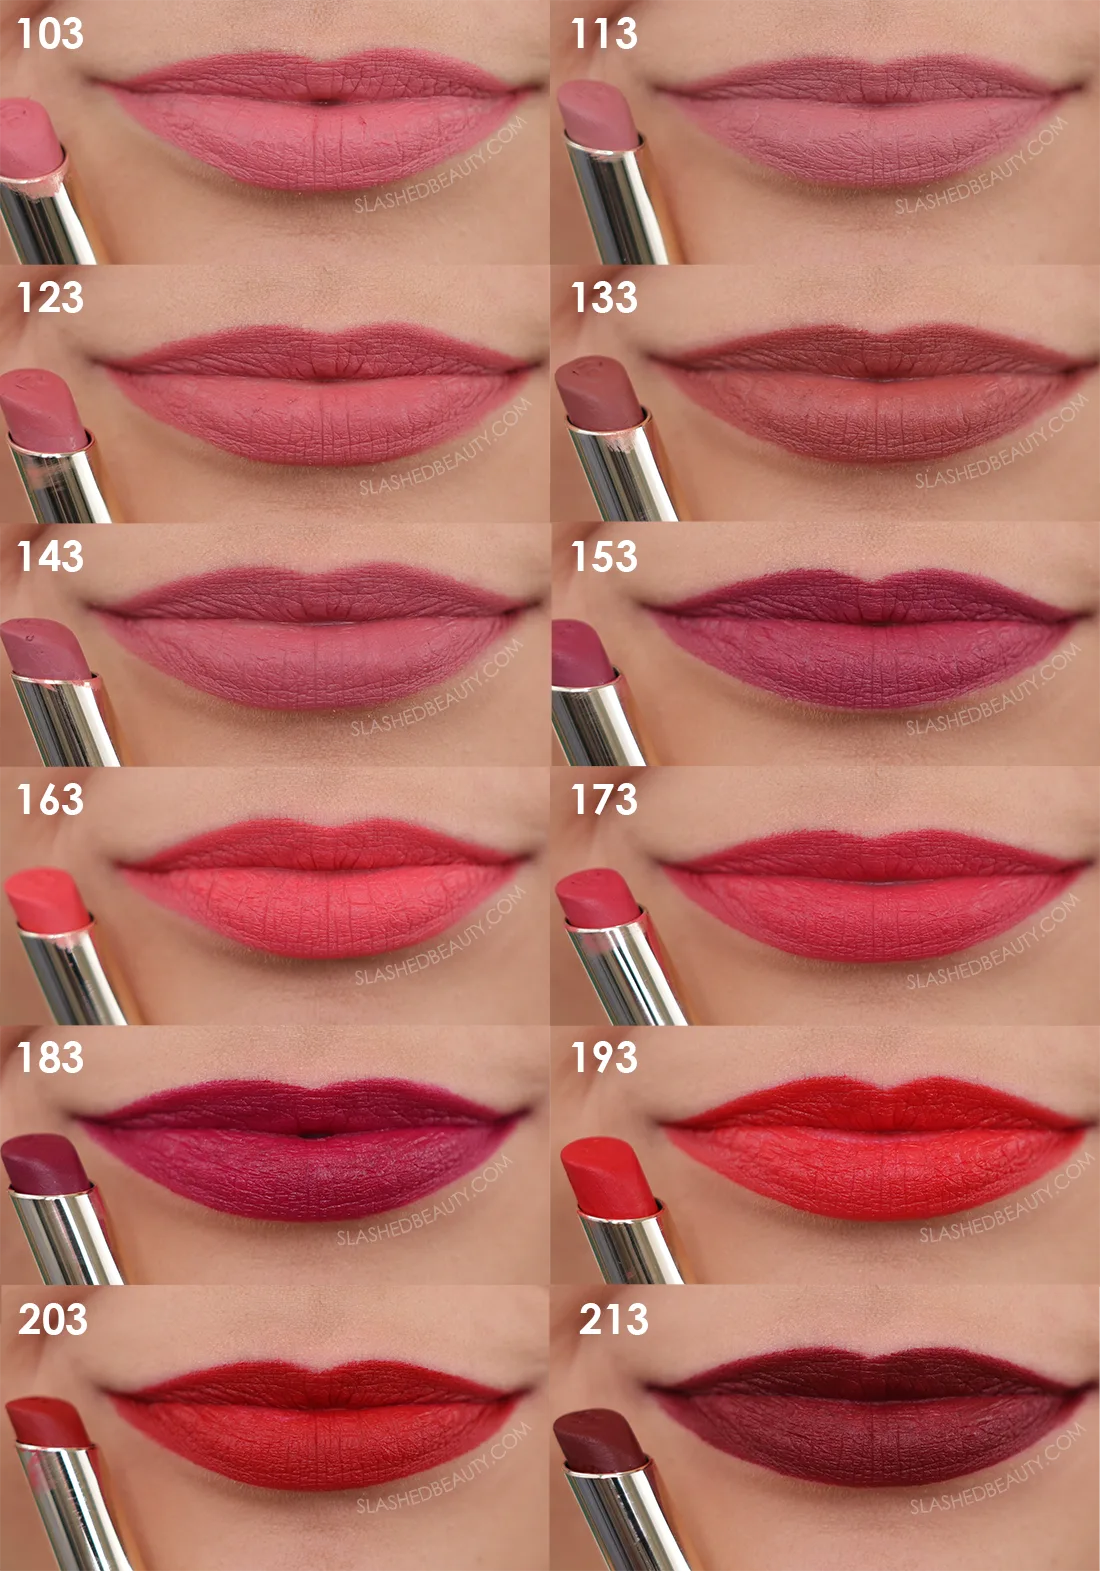 L'Oreal Colour Riche Matte Lipstick Swatches on lips | Slashed Beauty